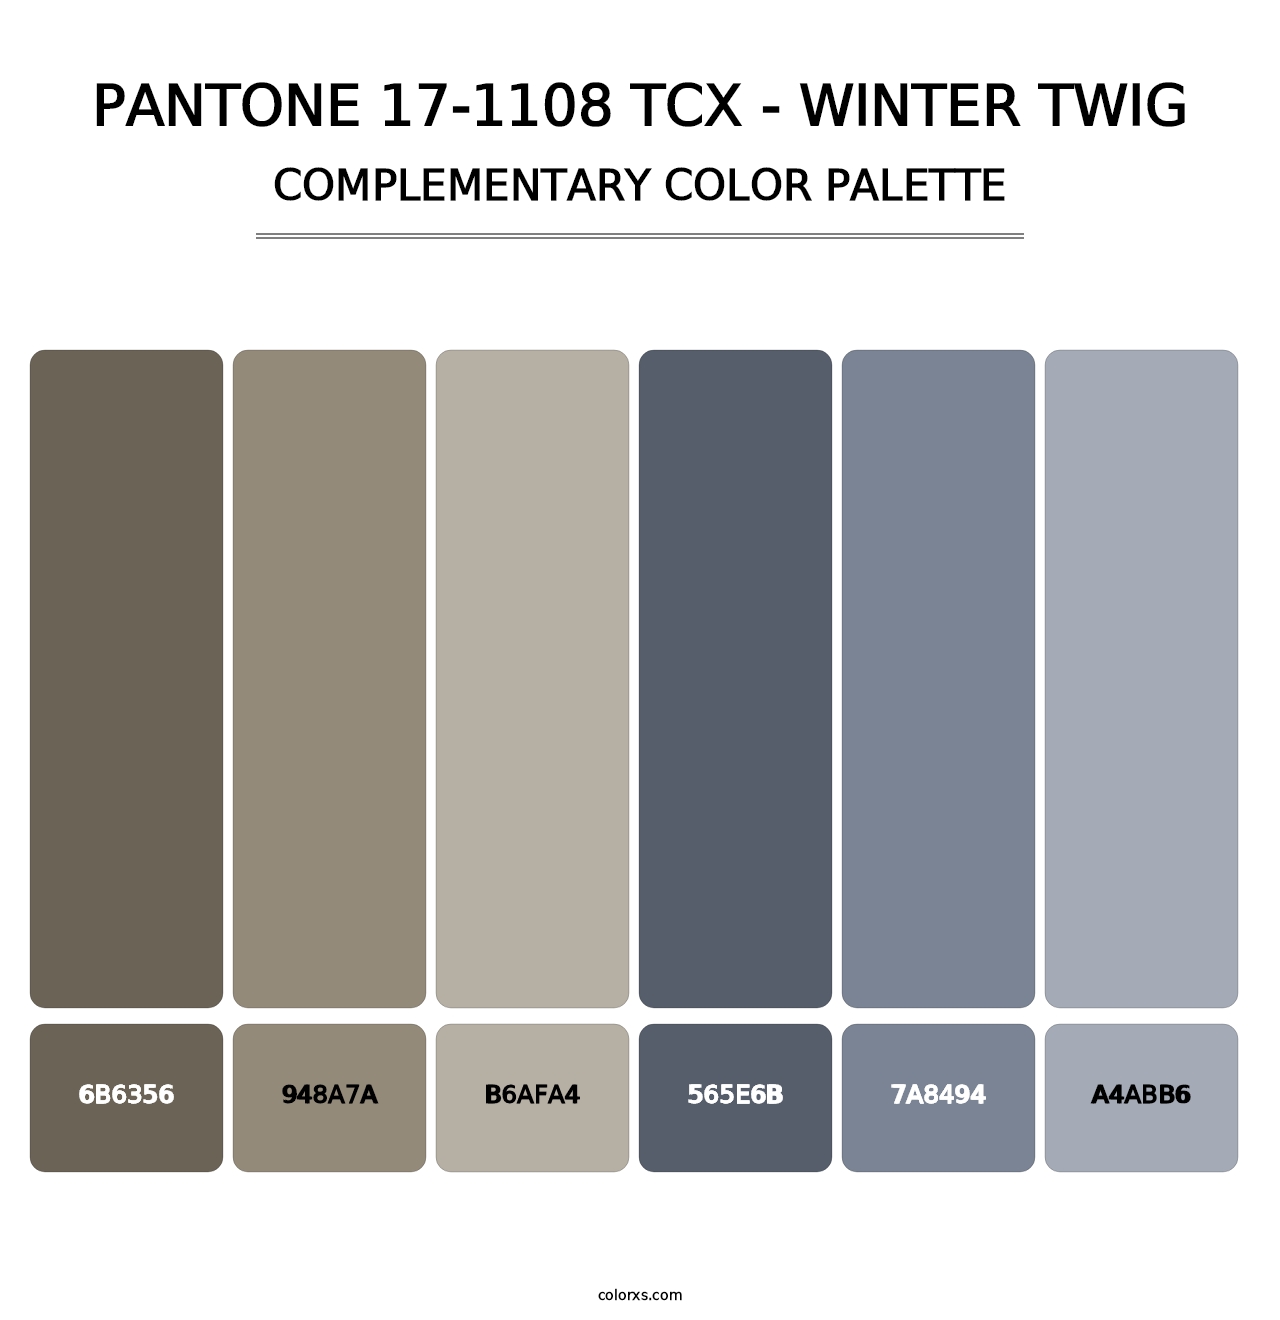 PANTONE 17-1108 TCX - Winter Twig - Complementary Color Palette